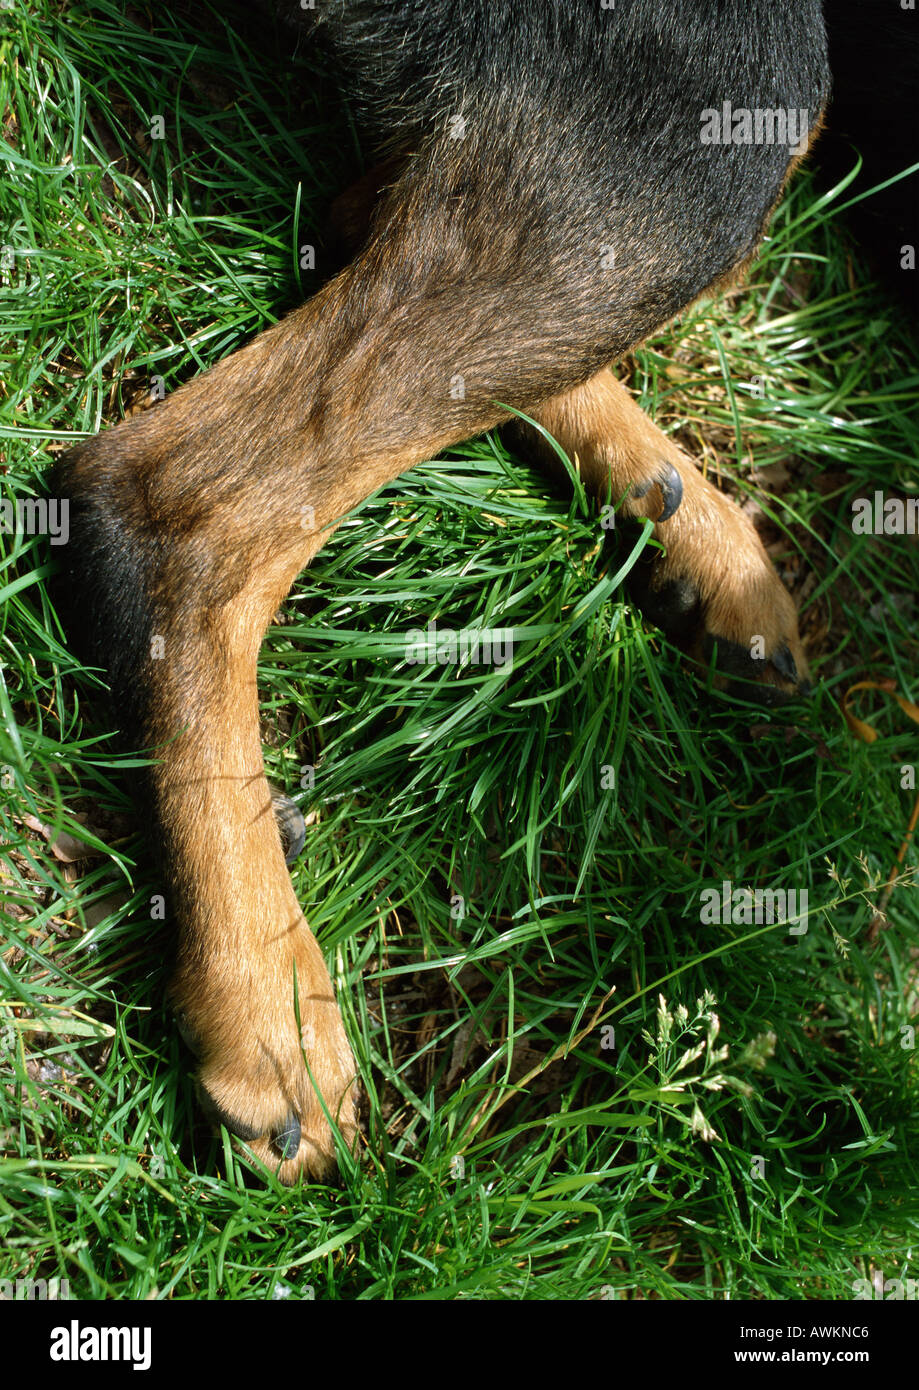 [Image: dogs-hind-legs-lying-down-AWKNC6.jpg]